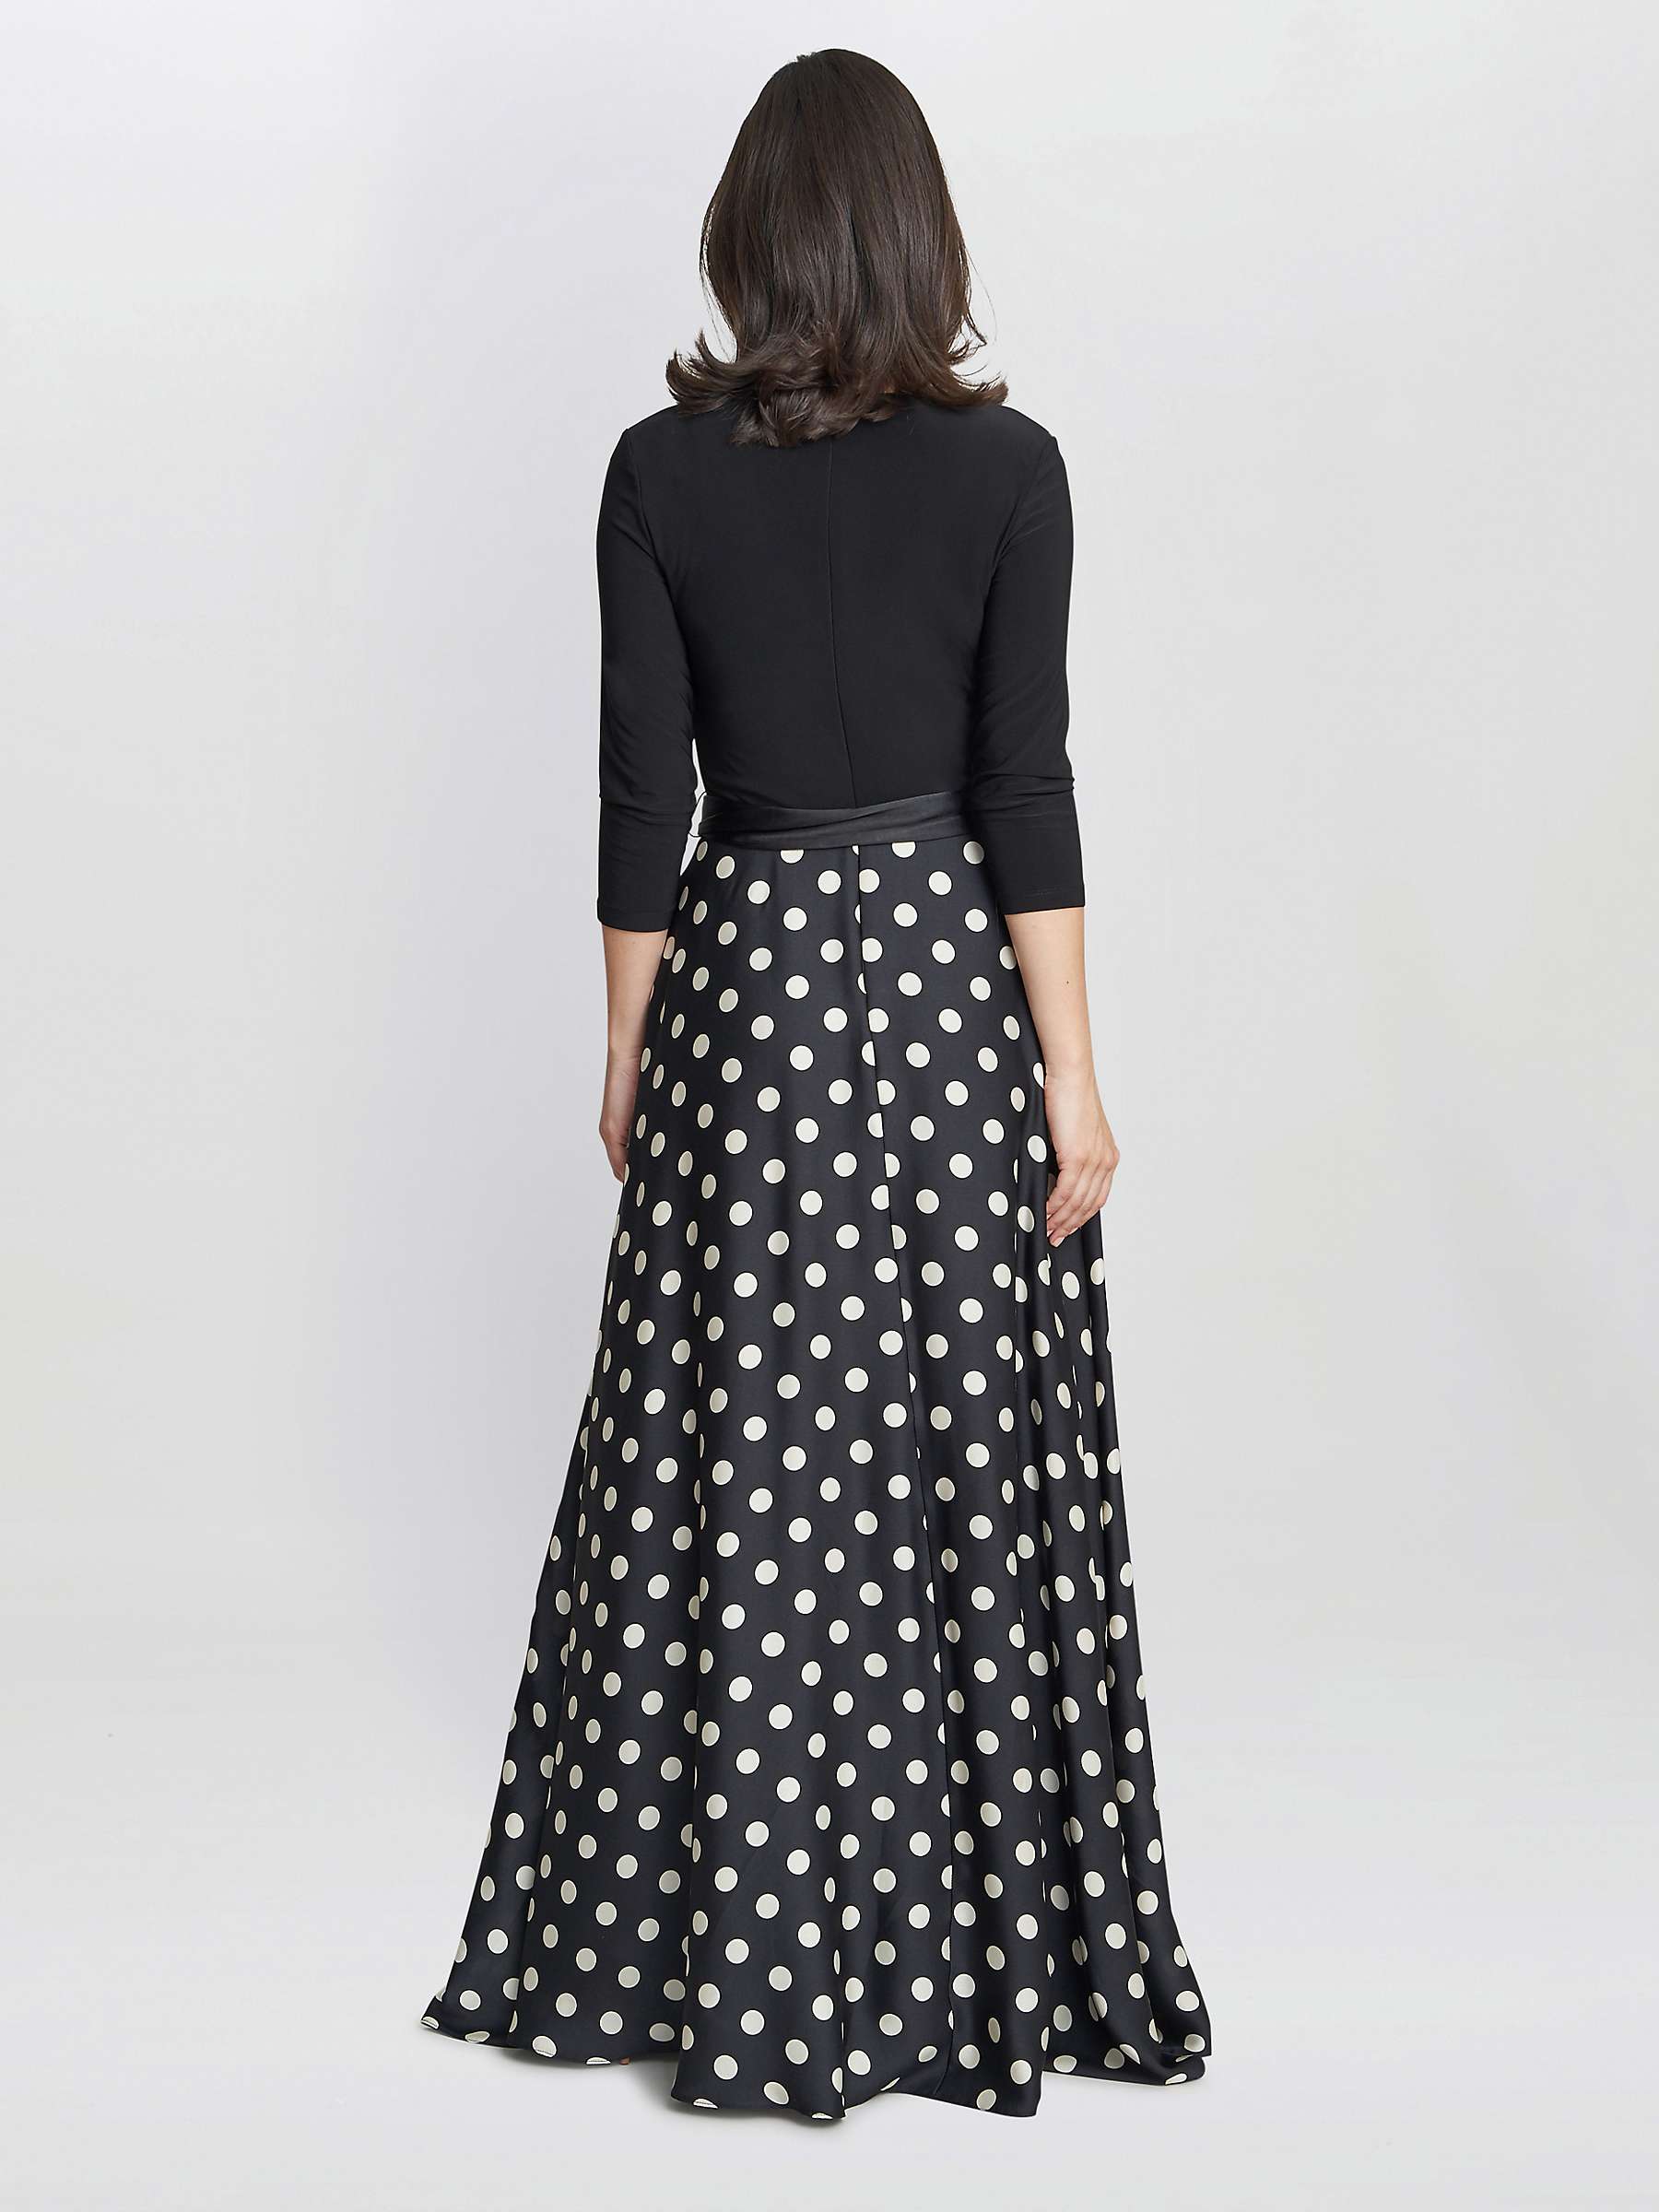 Buy Gina Bacconi Christina Spot Print Satin And Jersey Dress, Black/White Online at johnlewis.com